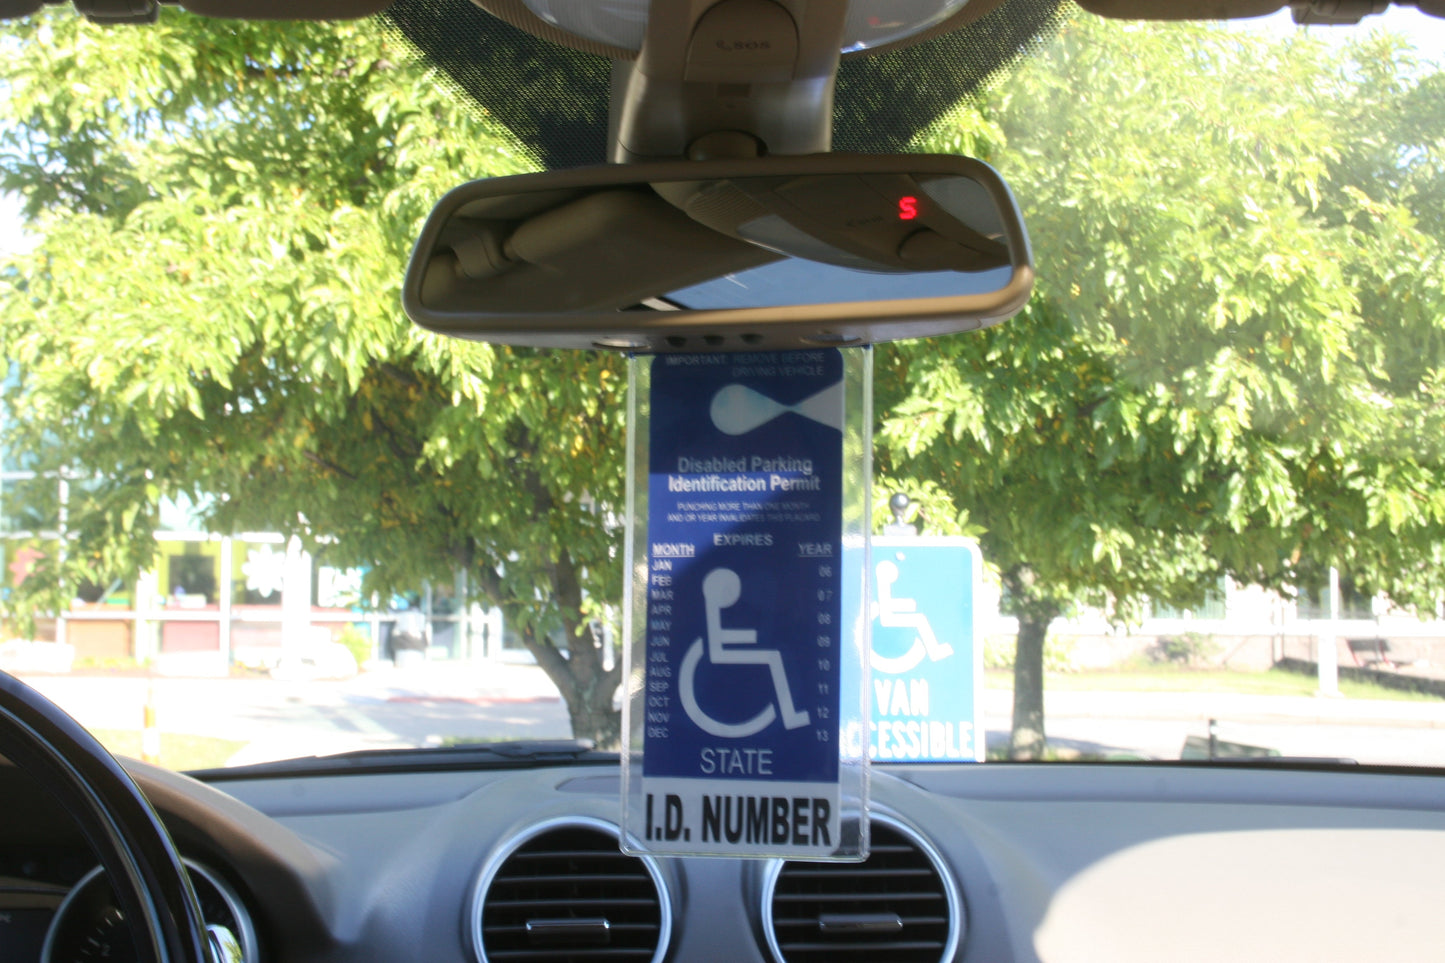 Mirortag Charm holder for handicap parking placard